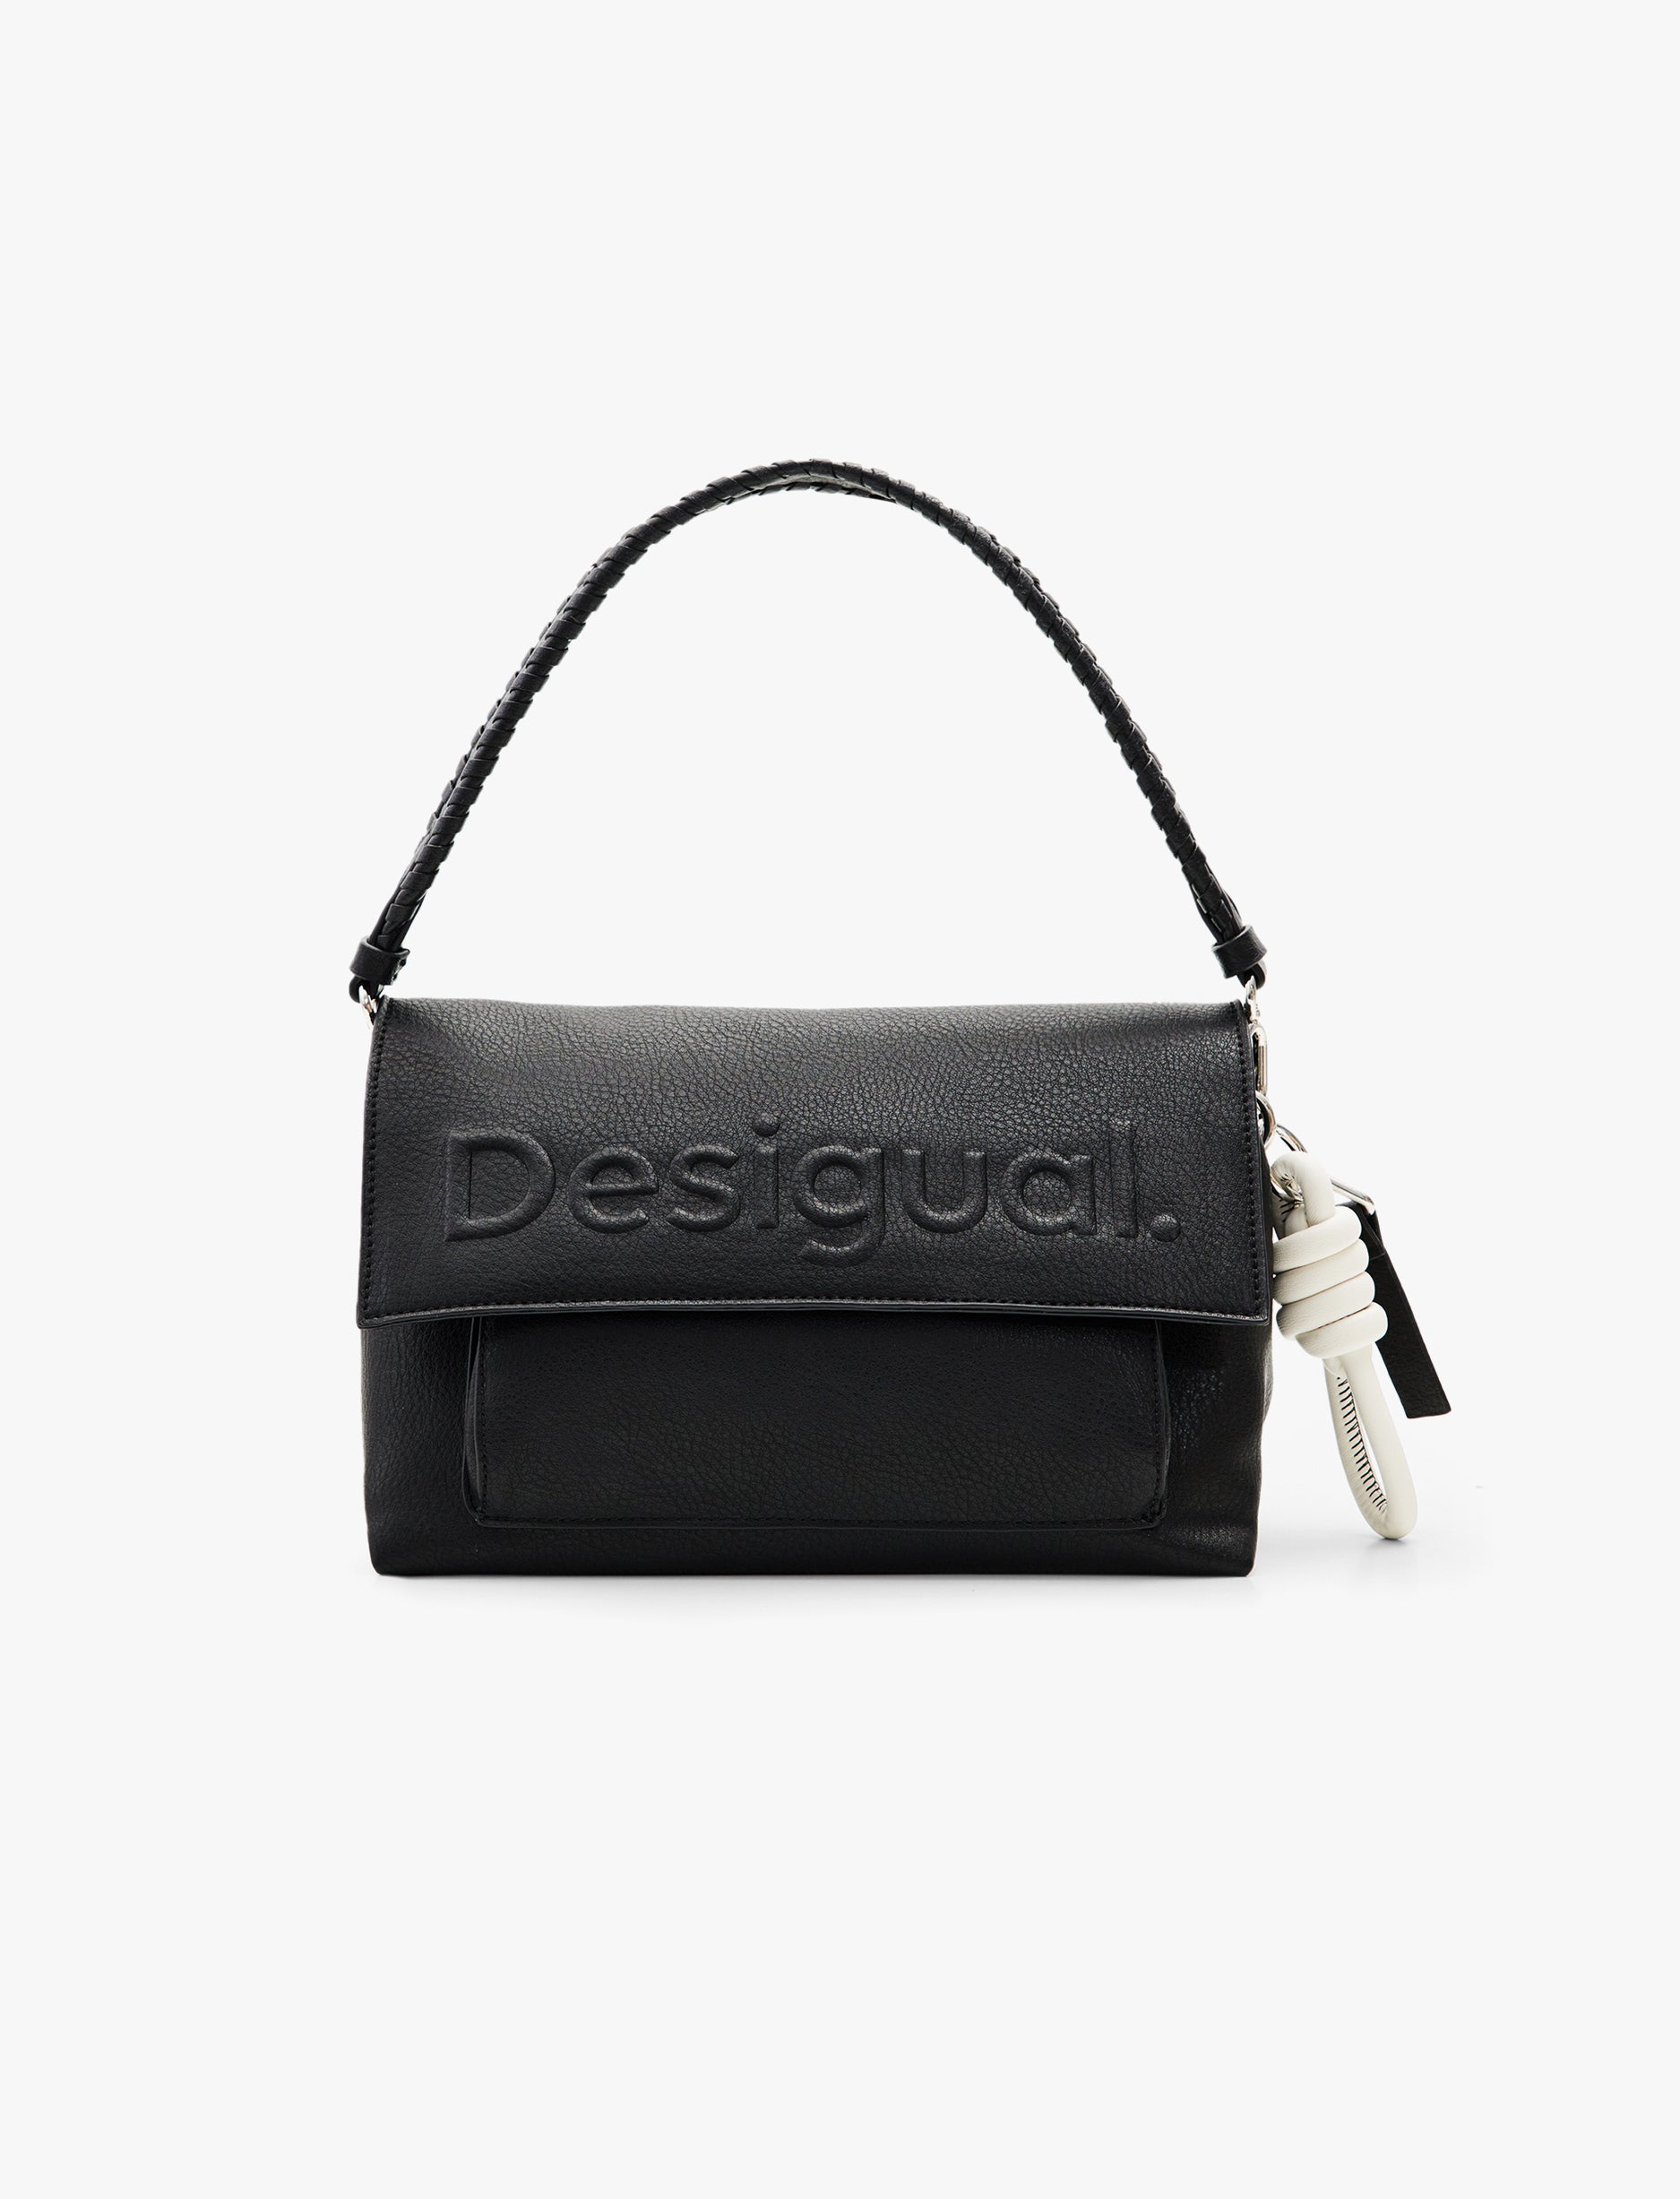 Desigual Bag Half Logo 24 Venecia 2.0 - תיק קרוסבודי בצבע שחור